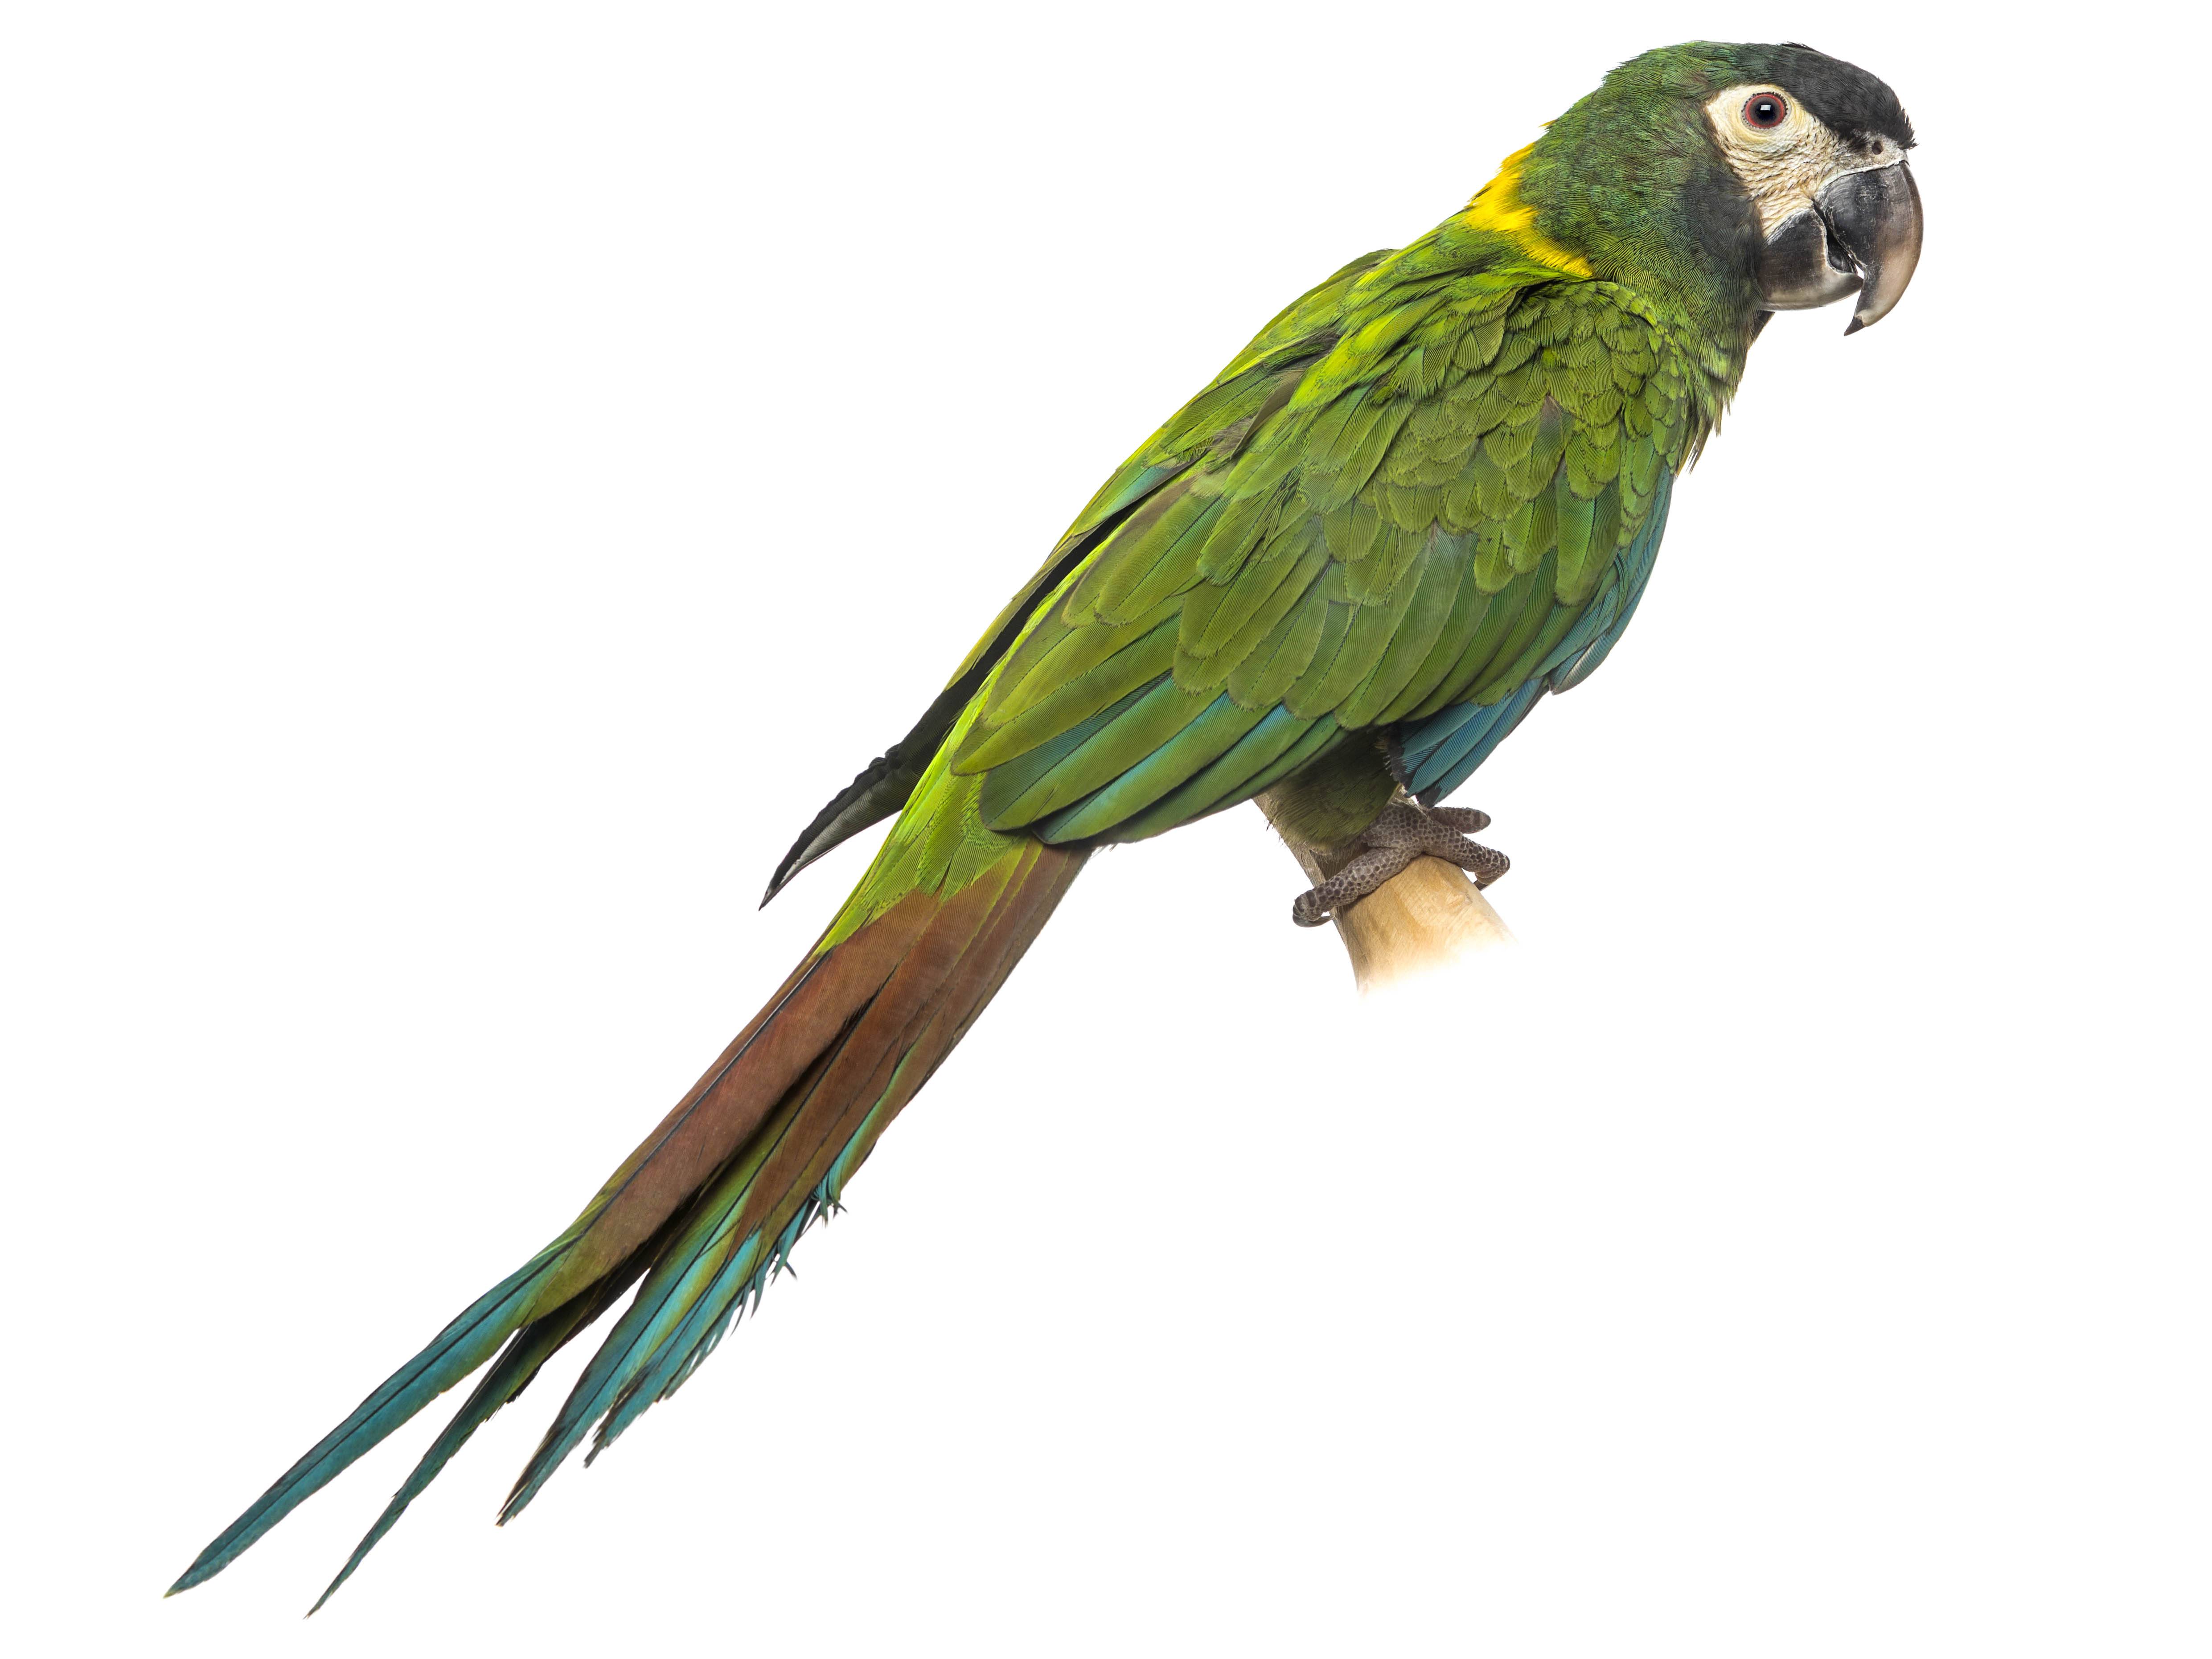 A photo of a Golden-collared Macaw (Primolius auricollis)